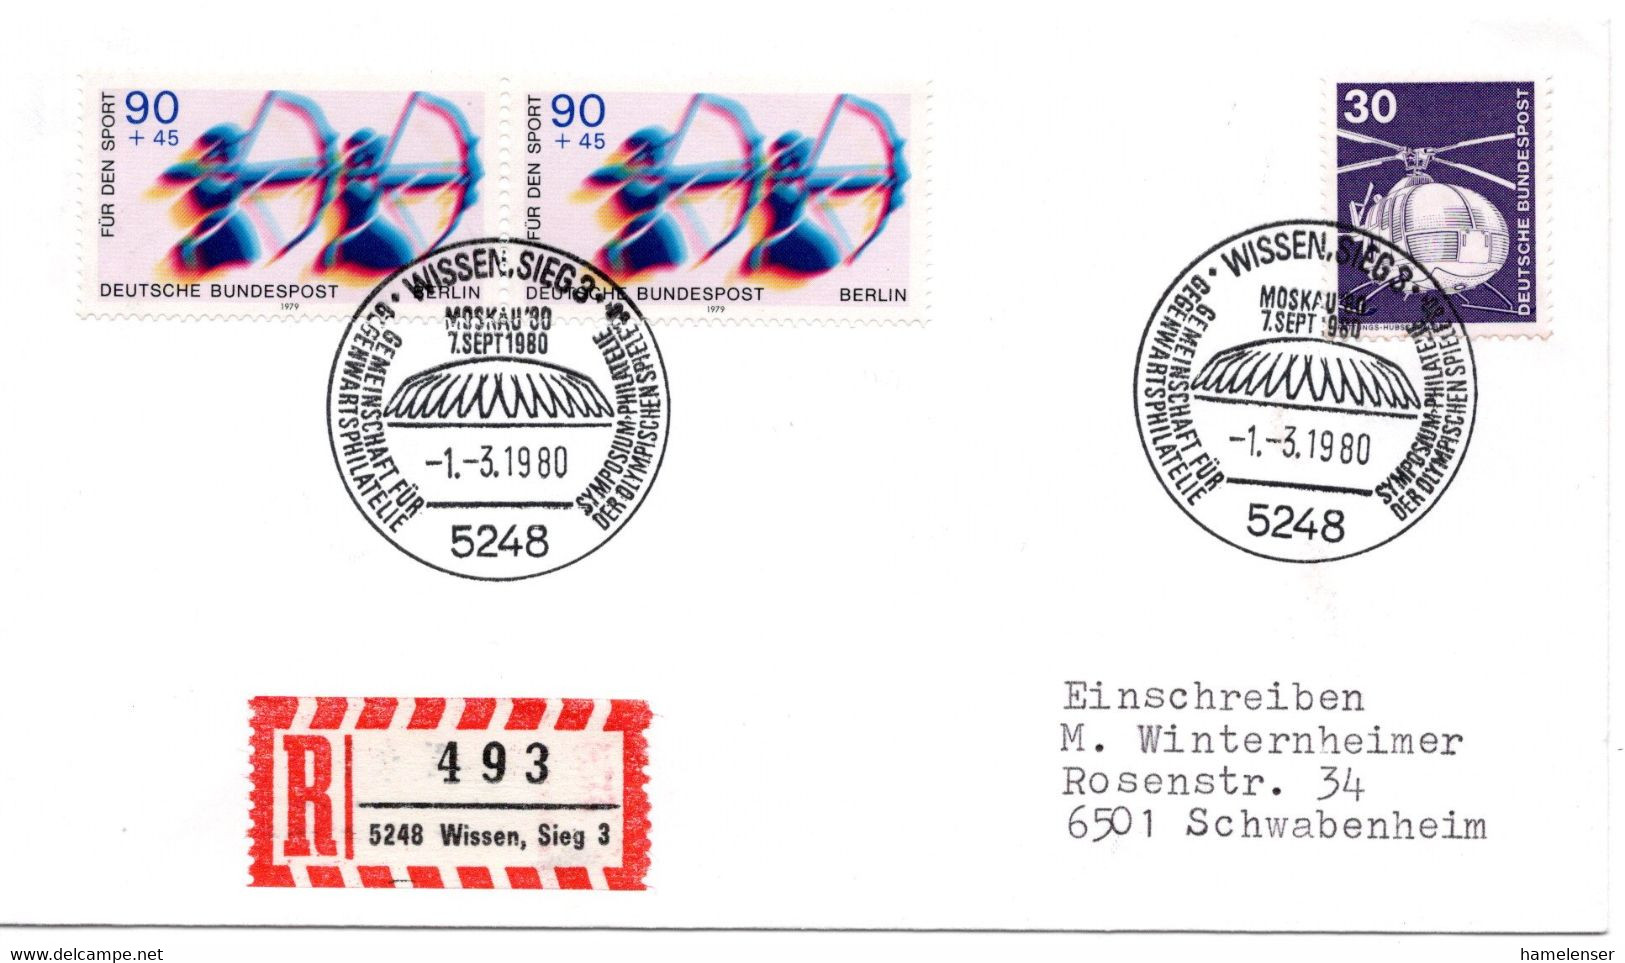 57243 - Berlin - 1980 - 2@90Pfg Sport '79 MiF A R-Bf SoStpl WISSEN - MOSKAU 1980 ... -> Schwabenheim - Ete 1980: Moscou